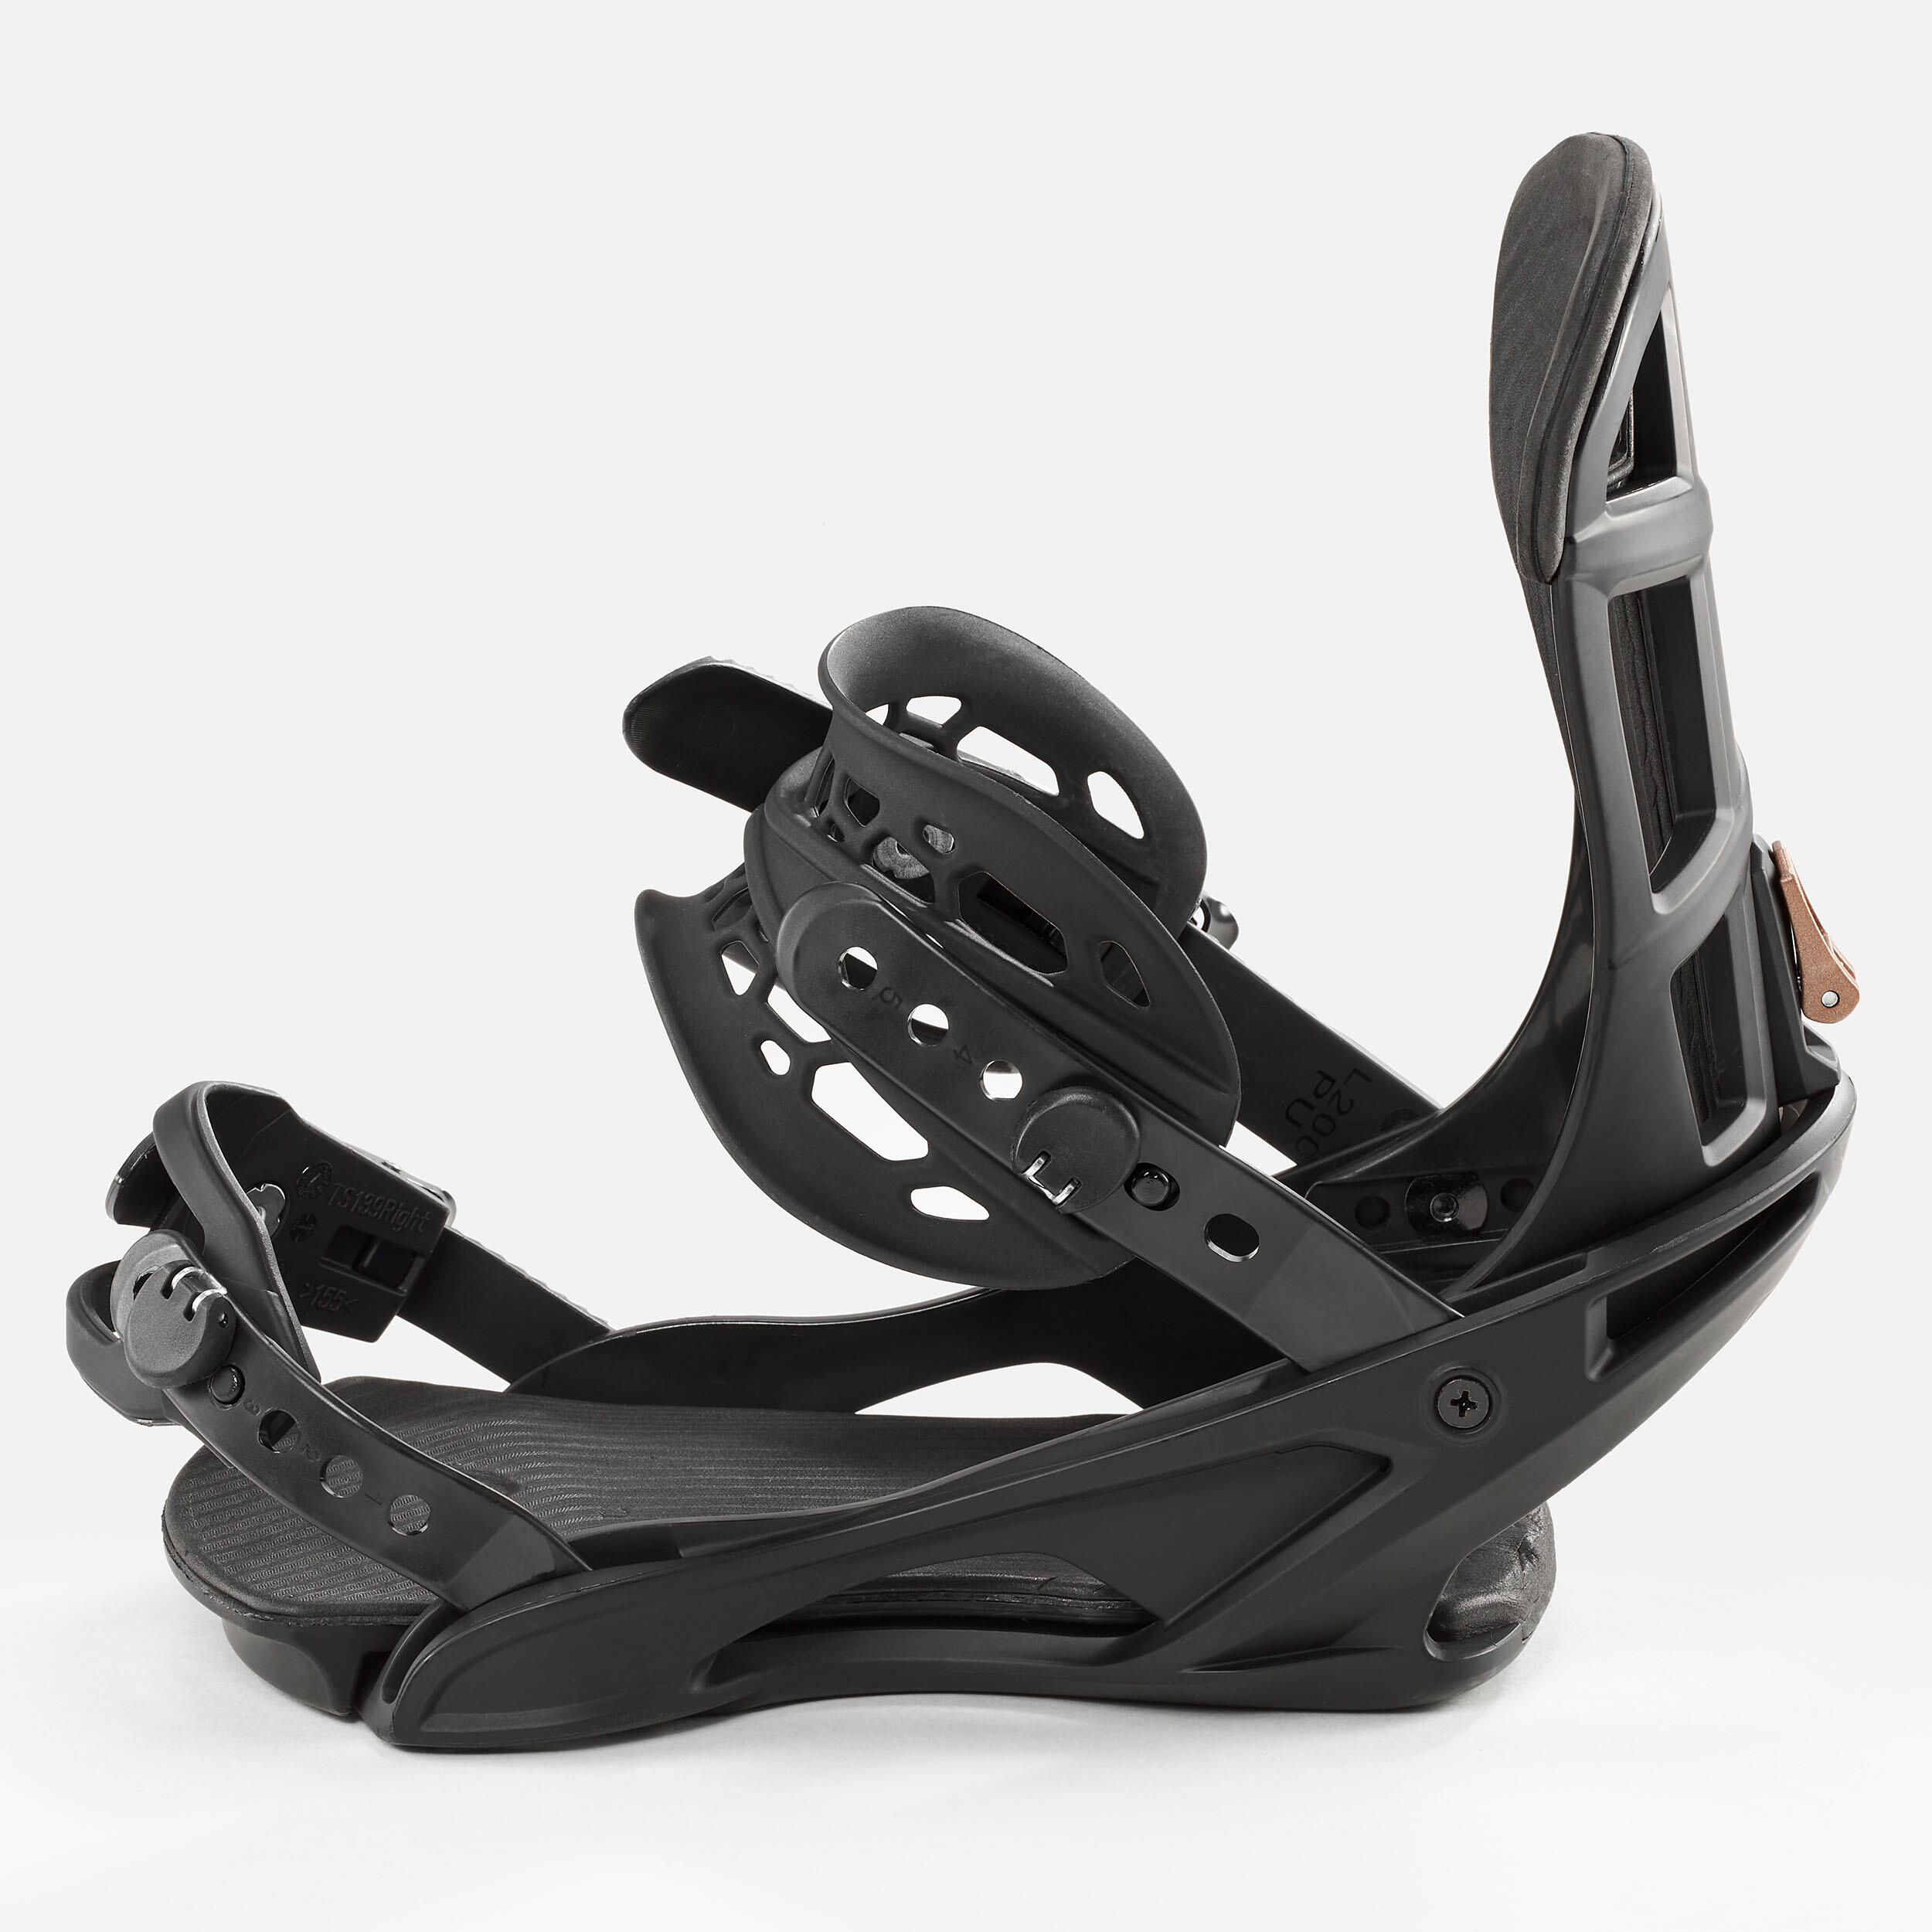 Unisex Snowboard Bindings, All Mountain/Freestyle - SNB 500 Black 7/12